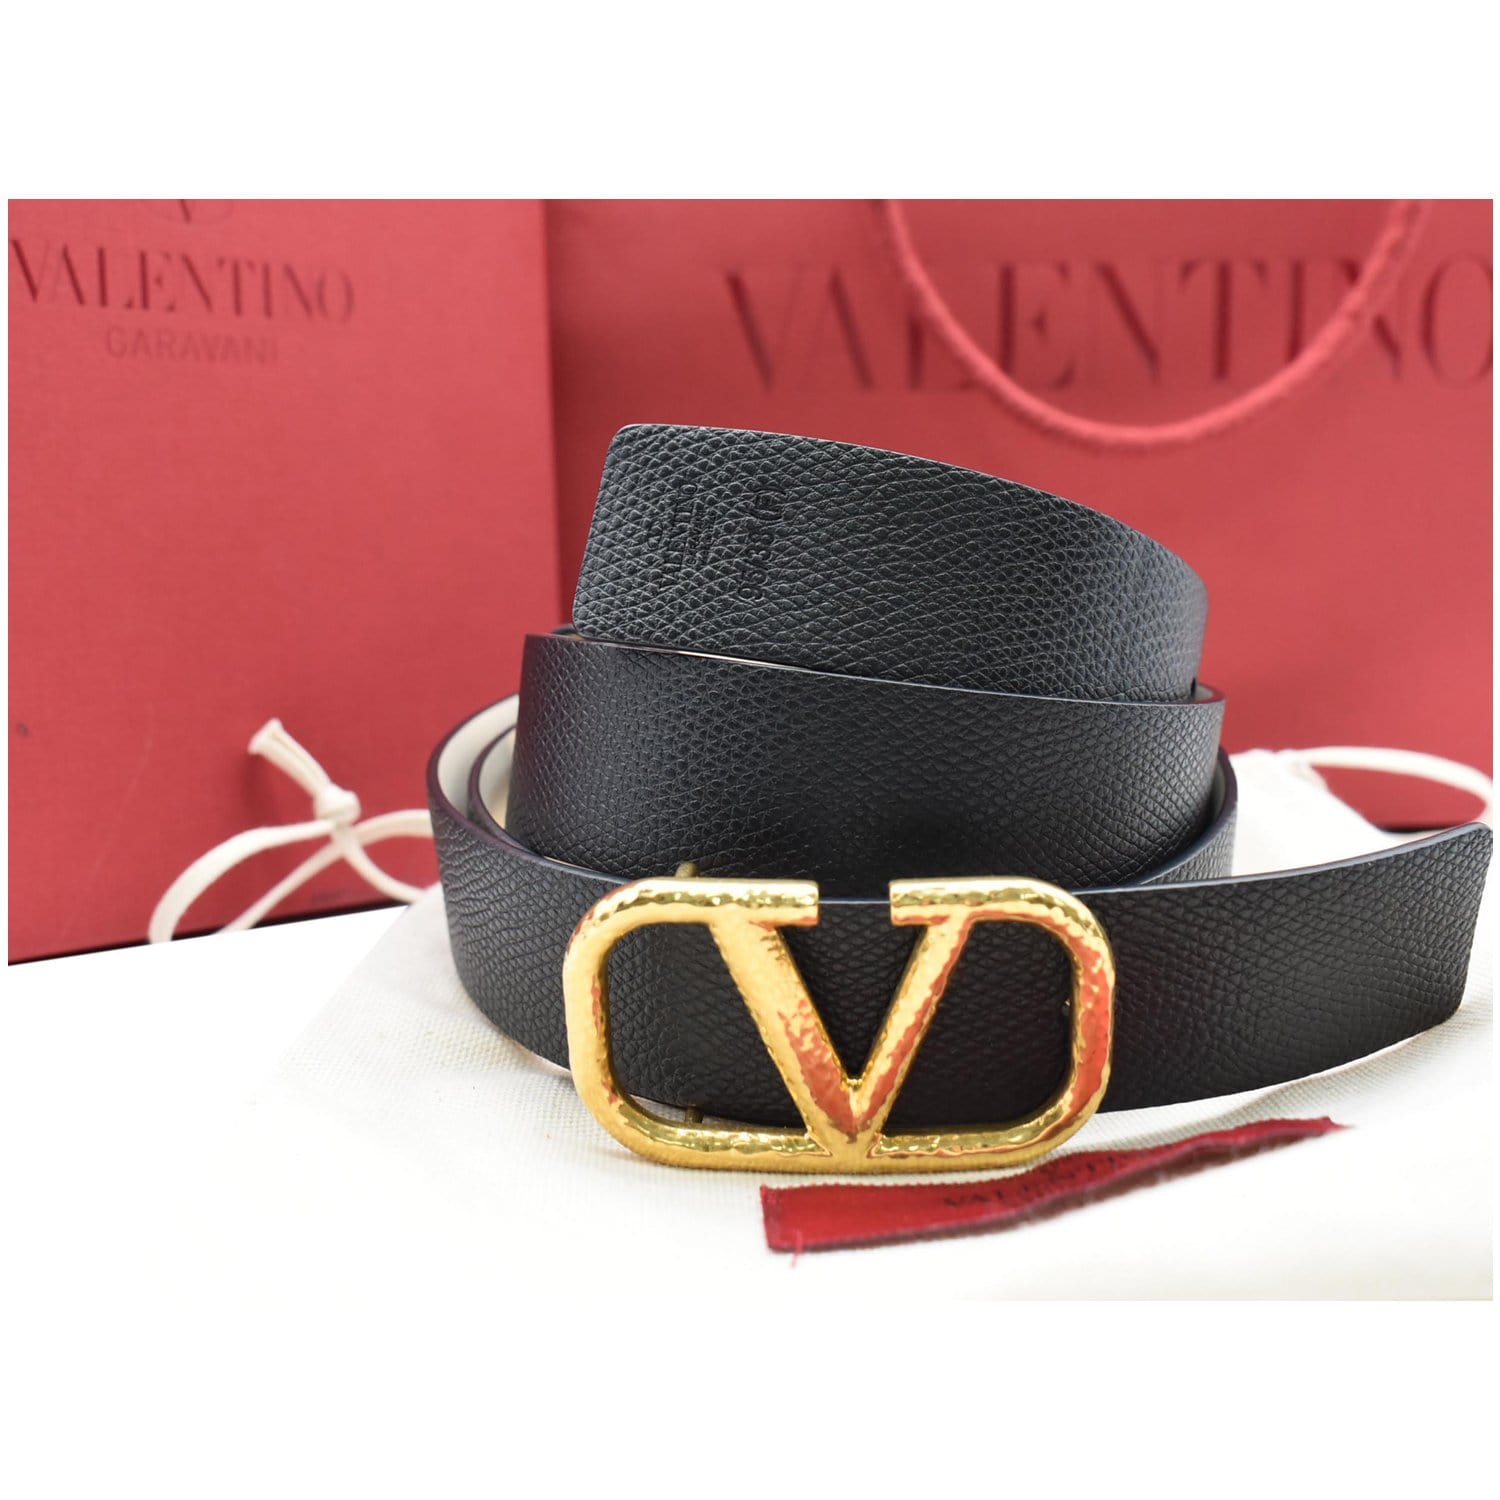 Valentino Garavani Women's Reversible Vlogo Leather Belt - Black Red - Size Small